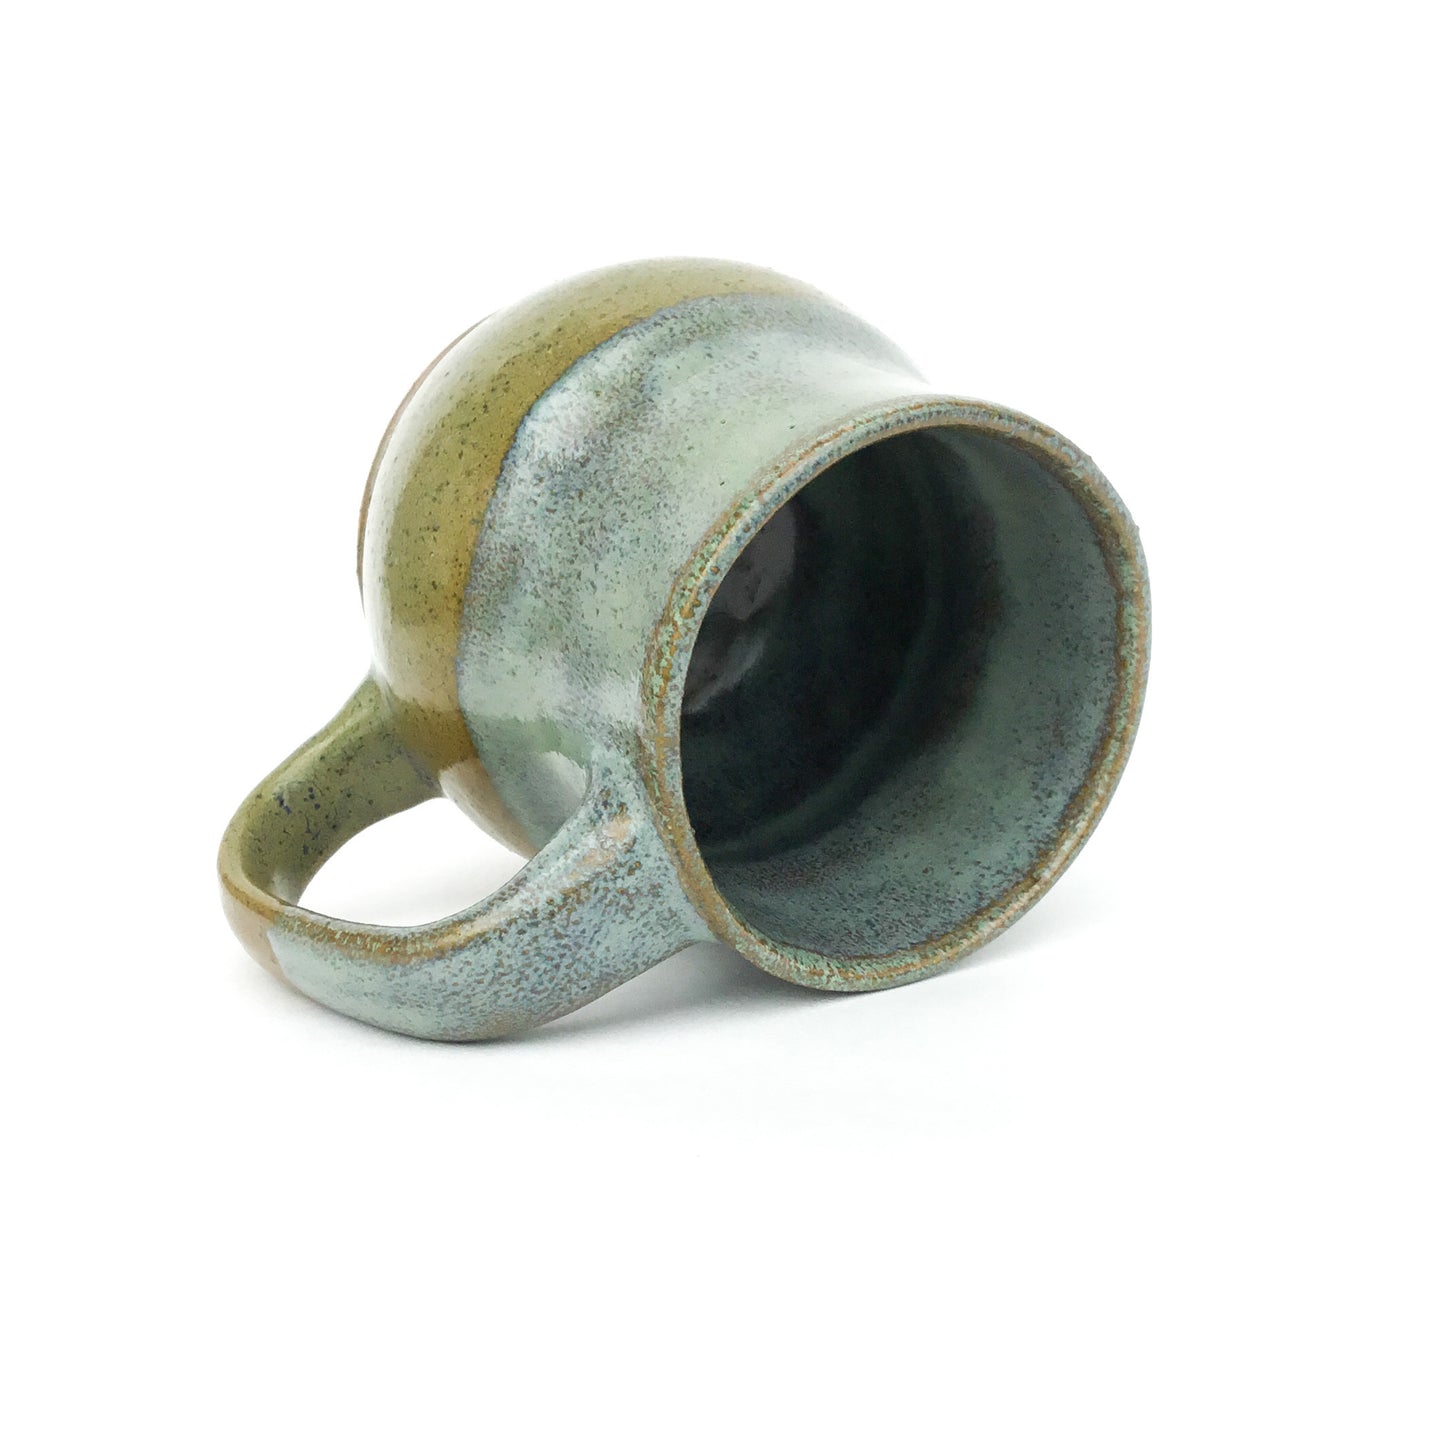 Seafoam Green & Speckled Olive Stoneware Mug - 8 ounce Ceramic Mug